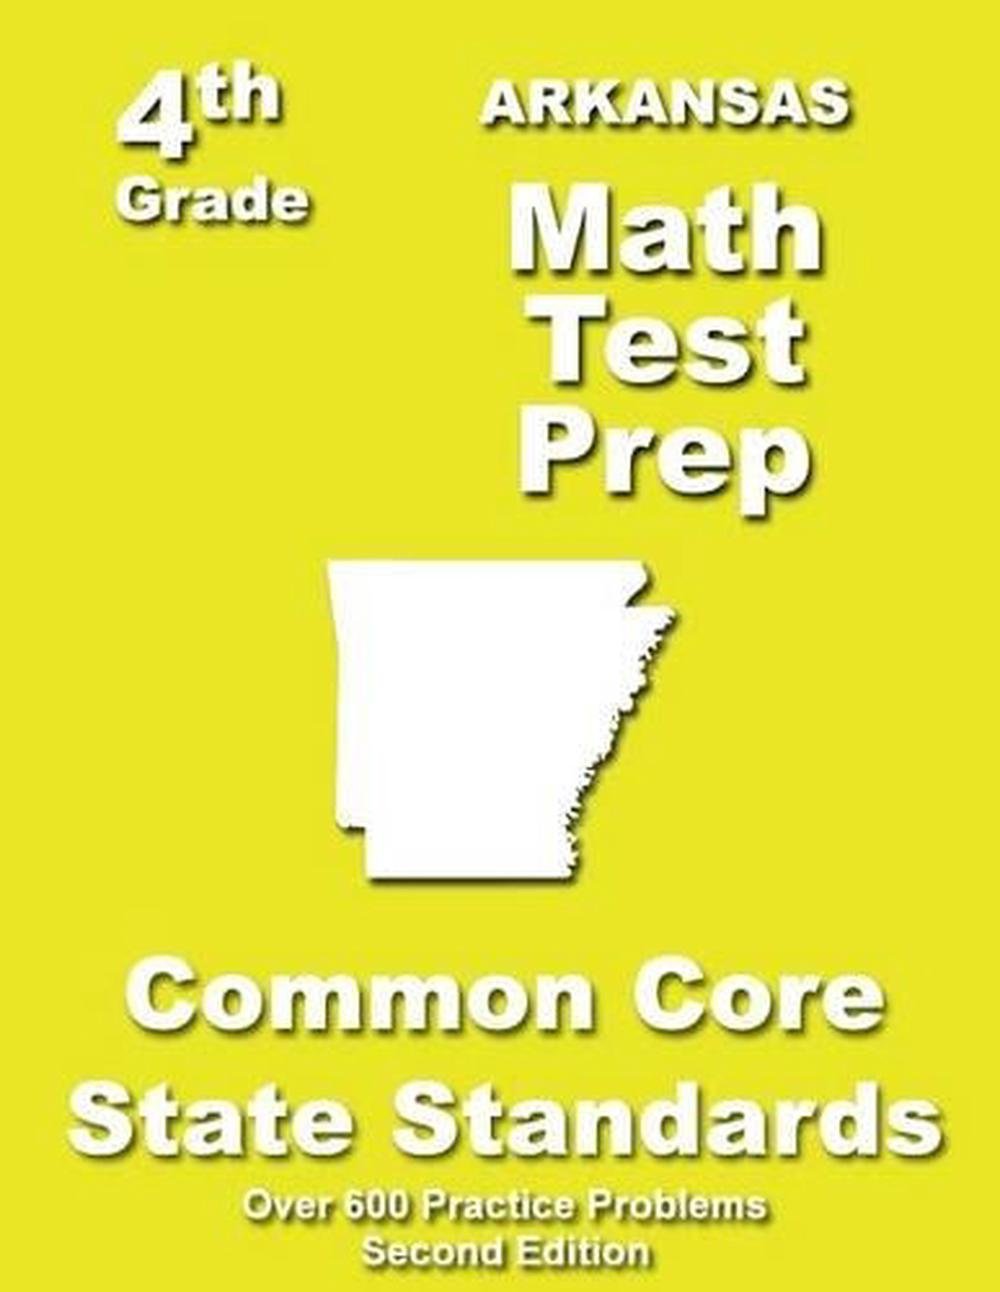 Arkansas 4th Grade Math Test Prep Common Core Learning Standards by Teachers' T 9781484175972